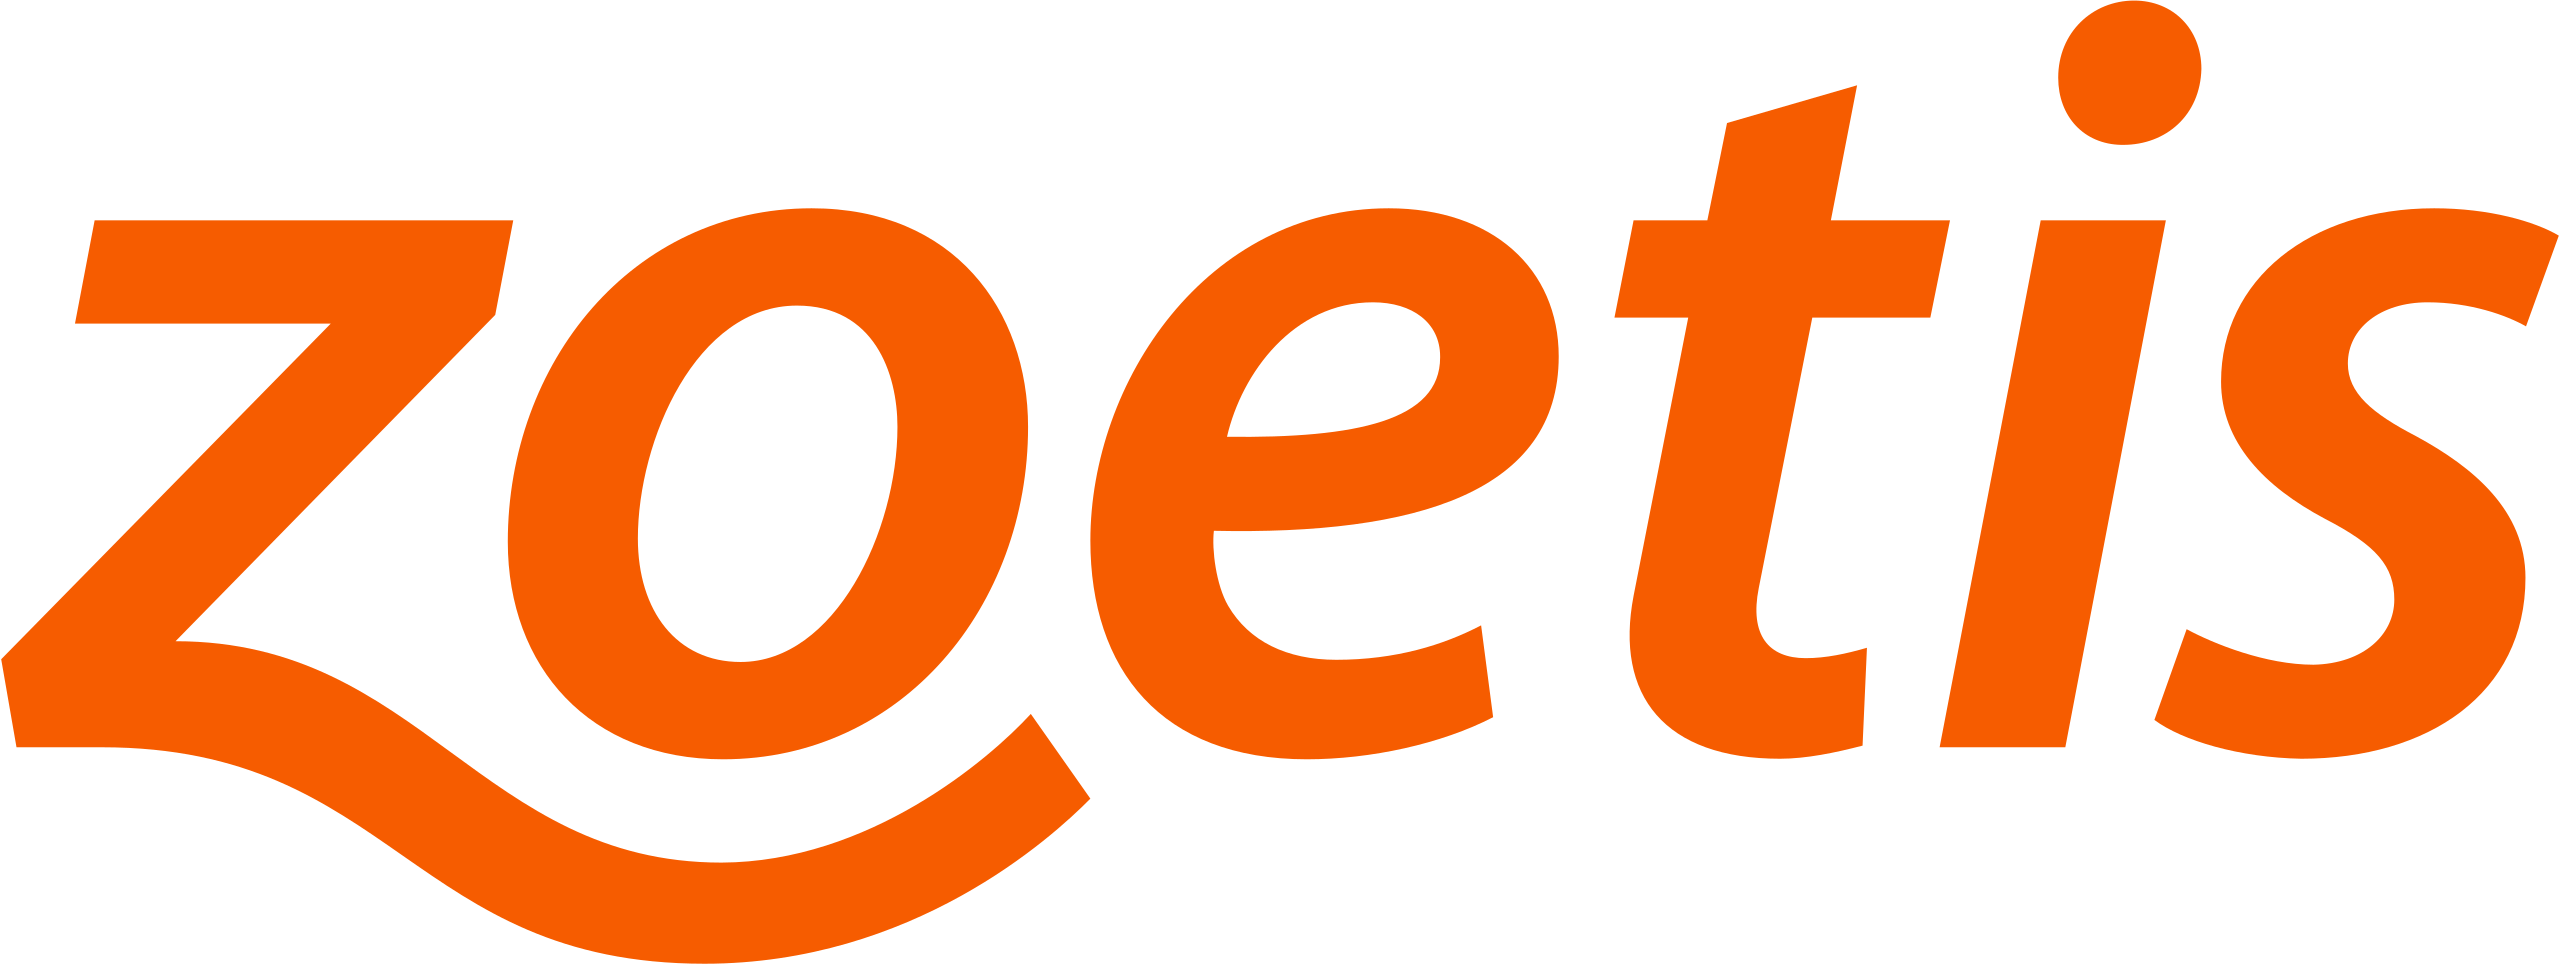 Logotipo fornecedor Zoetis